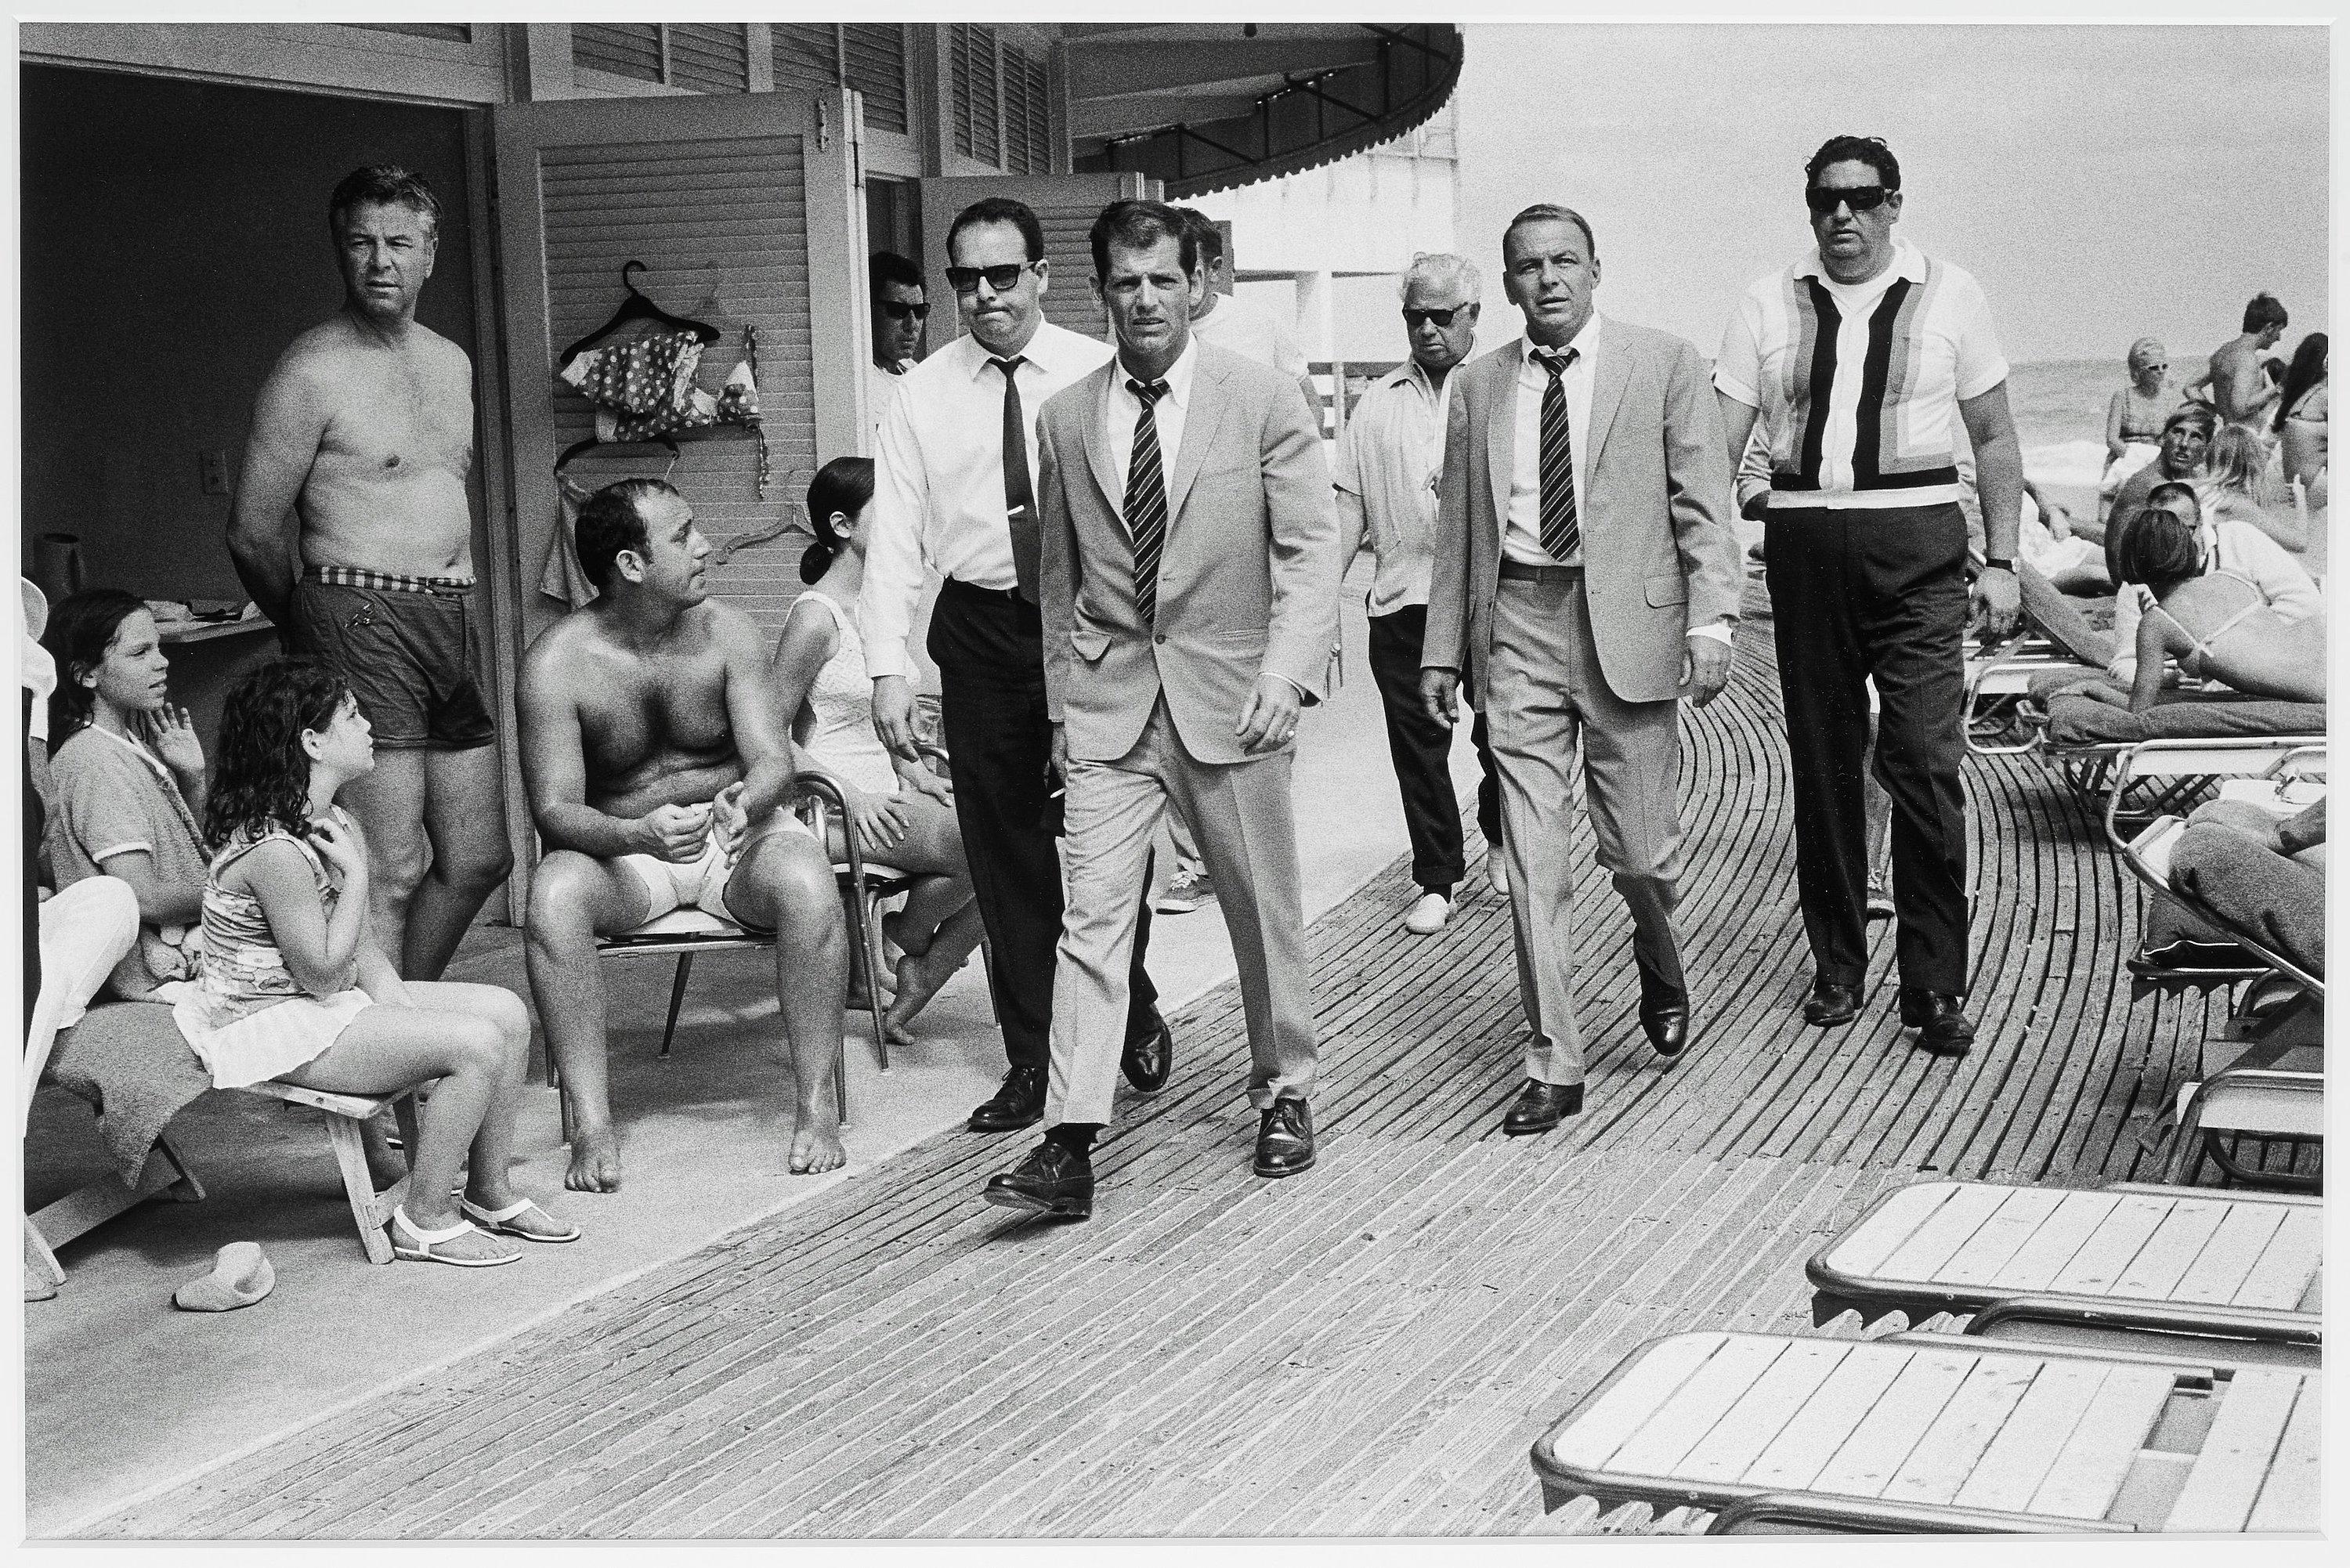 Terry O'Neill Black and White Photograph - Frank Sinatra "Boardwalk"